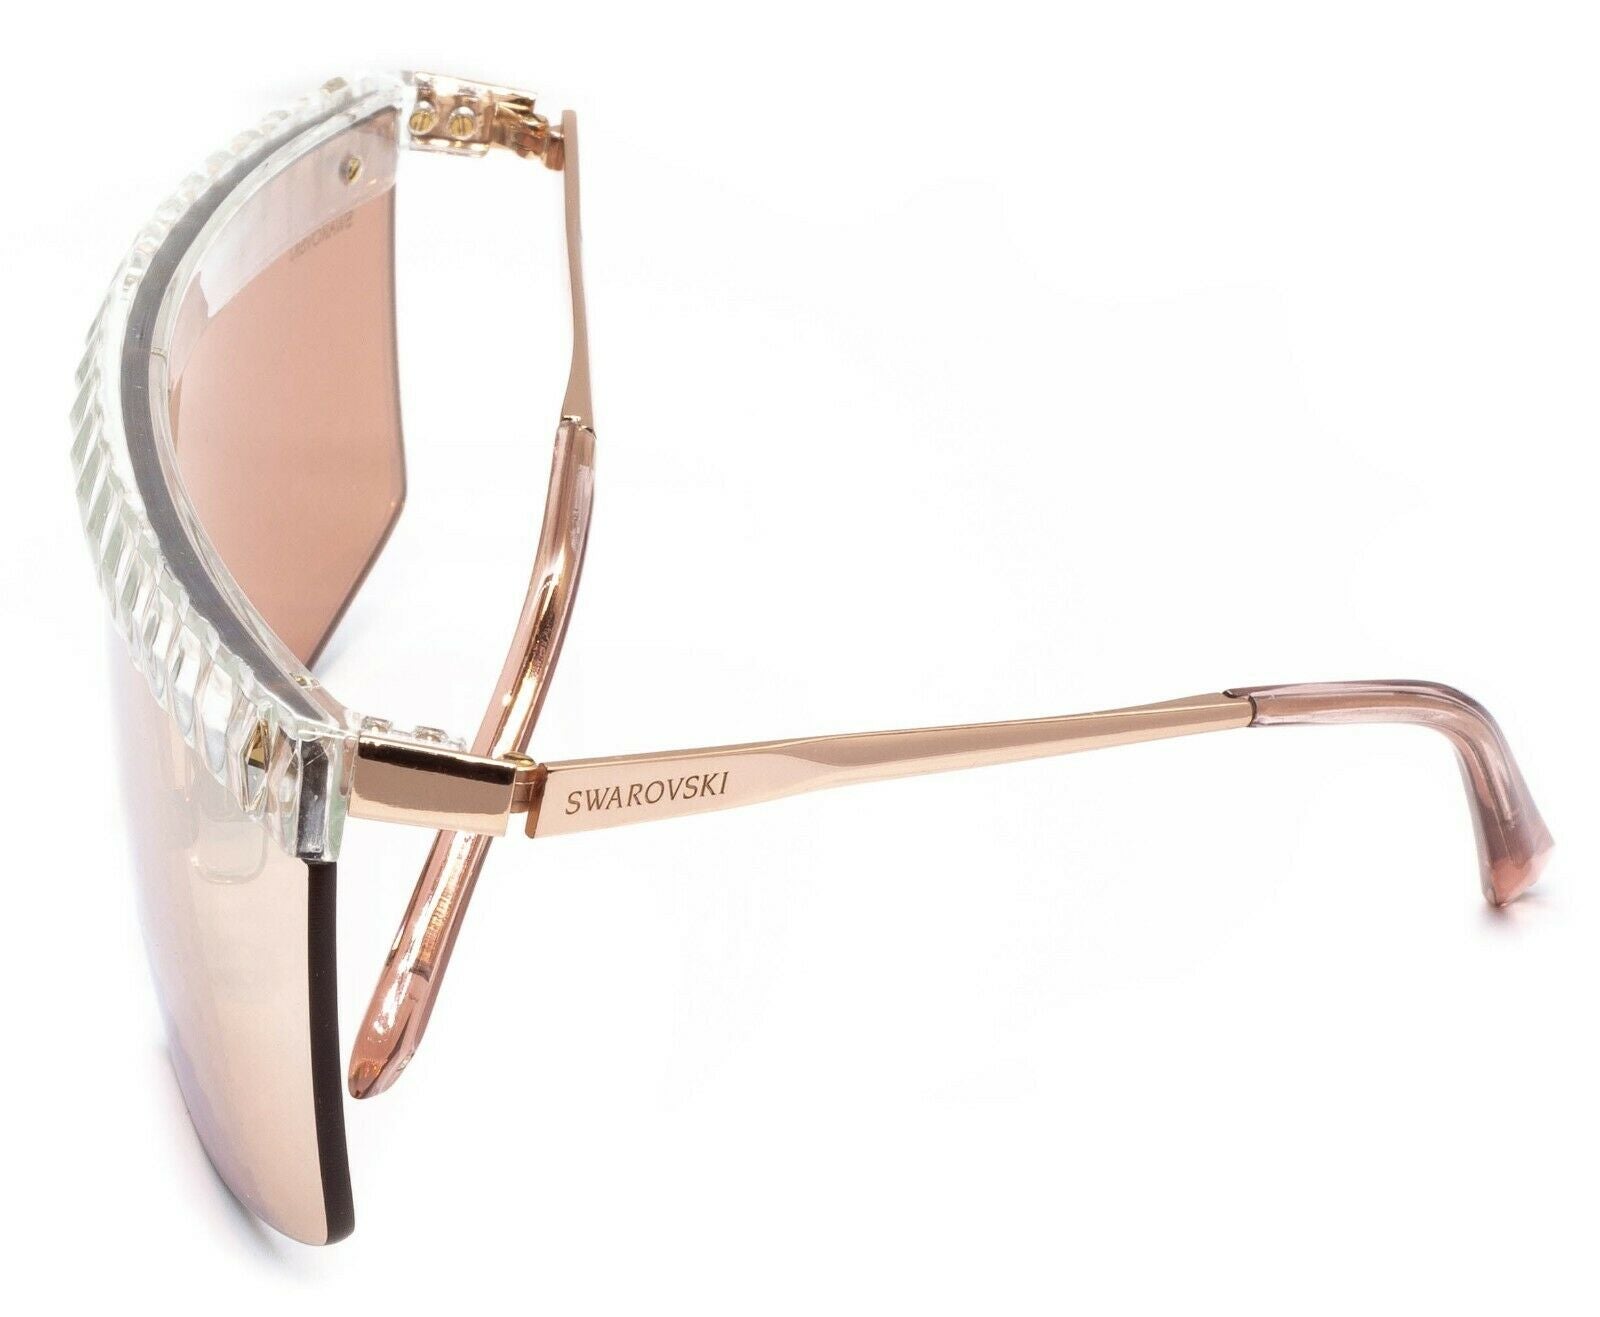 SWAROVSKI SK 197 33U Sunglasses Shades Eyewear Frames Glasses Ladies BNIB - New